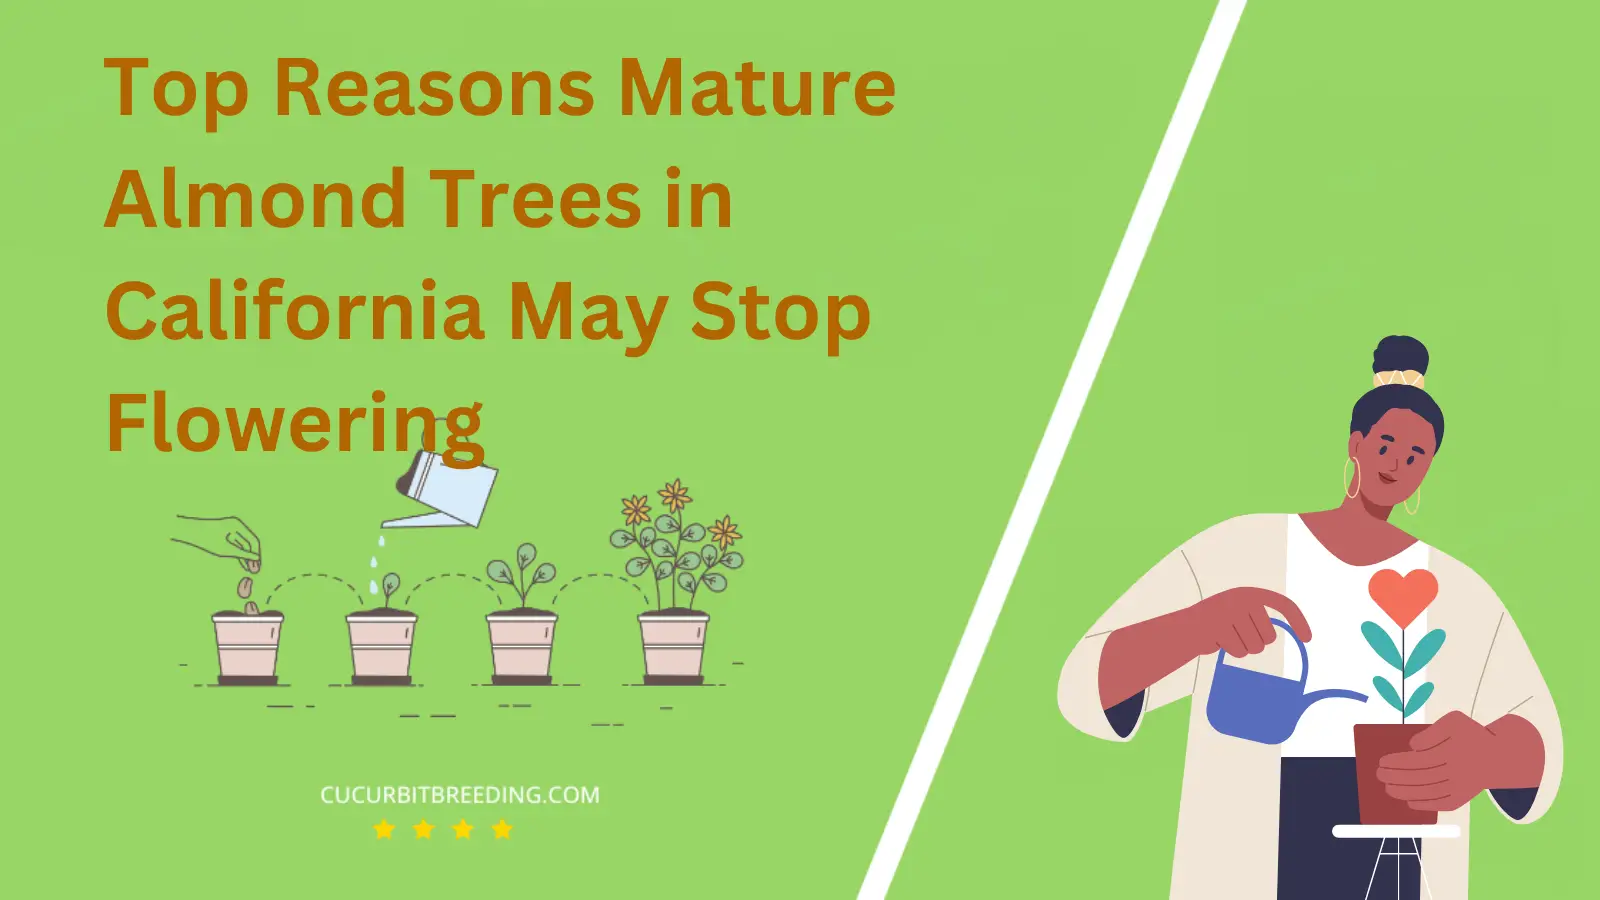 Top Reasons Mature Almond Trees in California May Stop Flowering